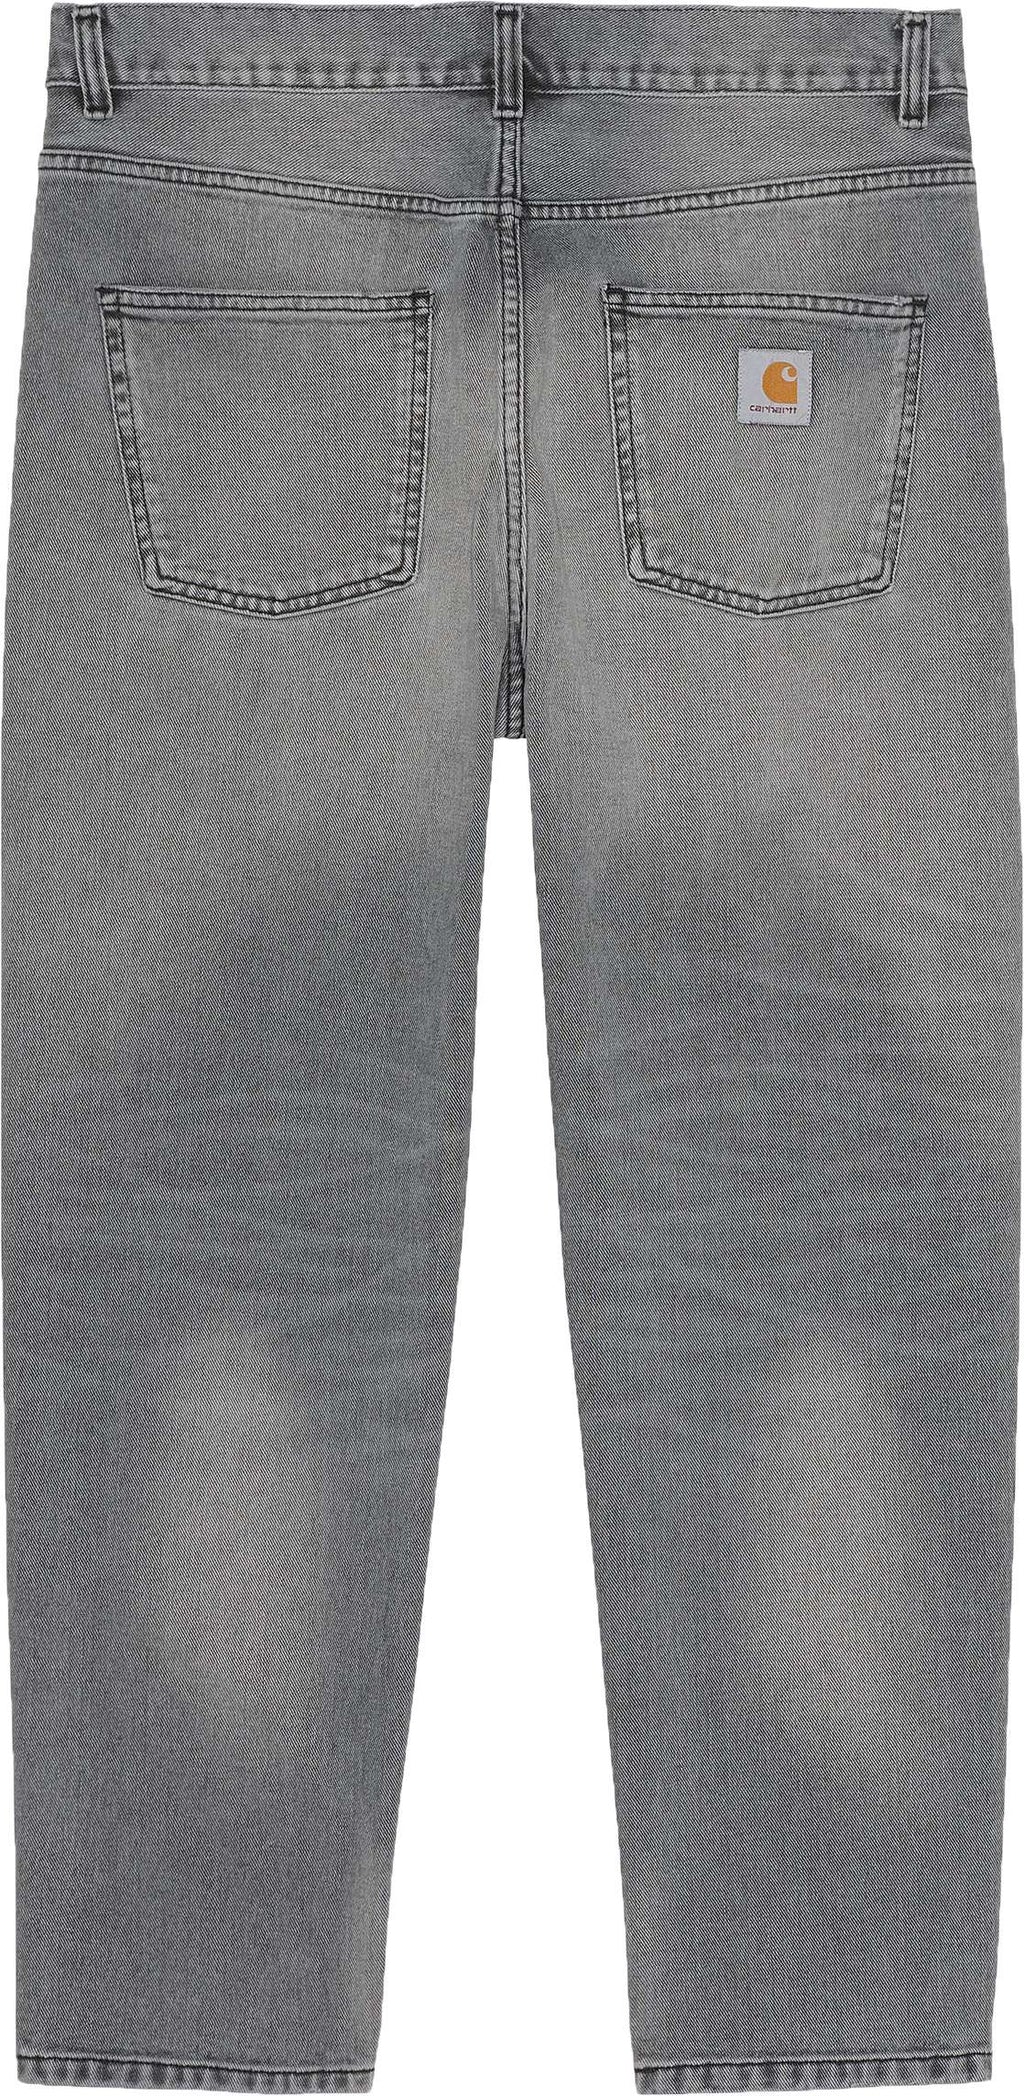  Carhartt Wip Jeans Newel Pant Black Light Used Wash Grigio Uomo - 3